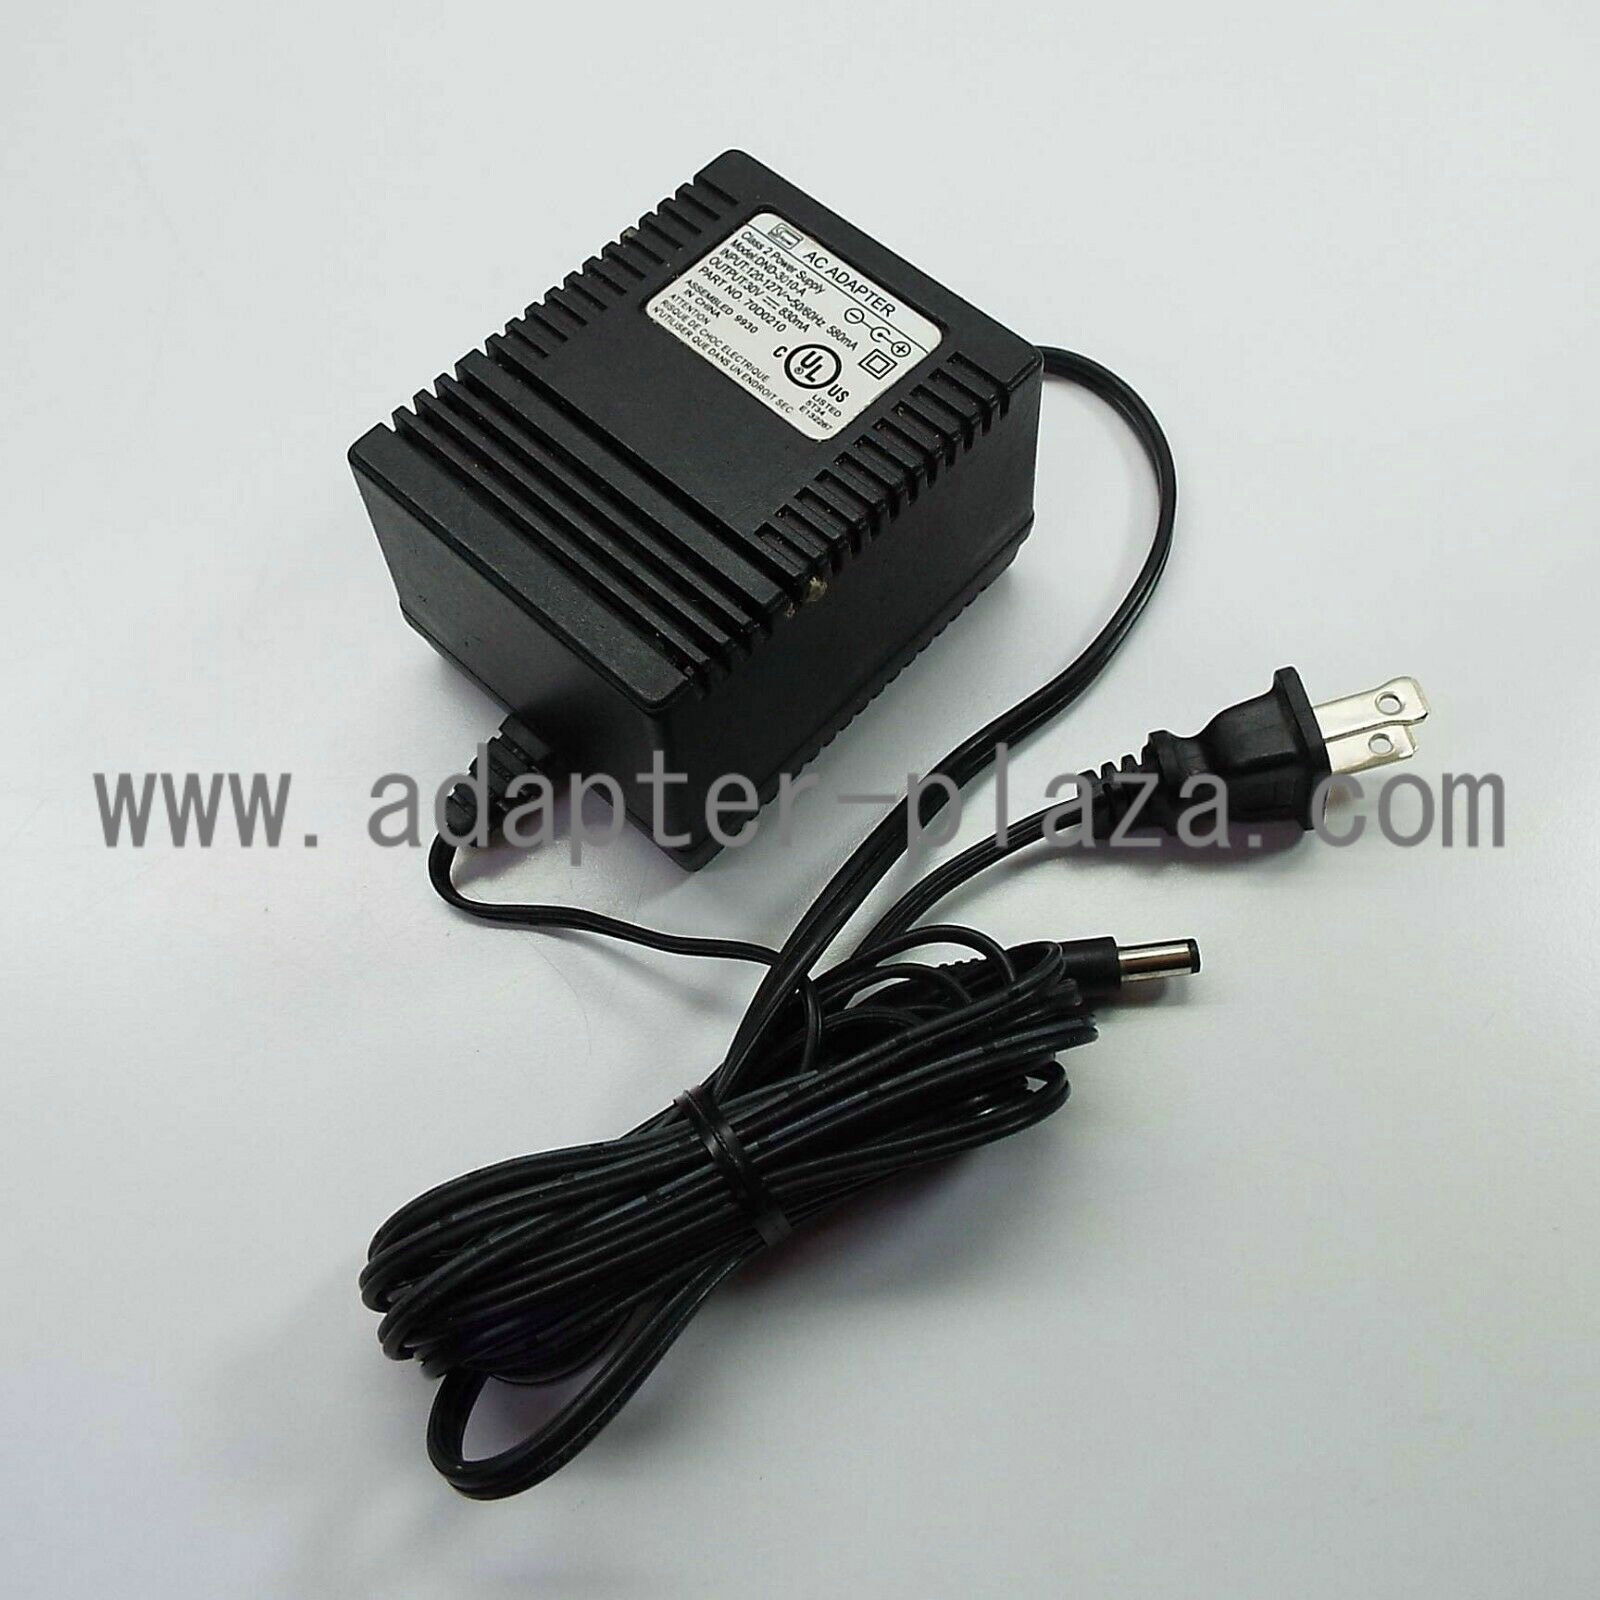 *Brand NEW* SKYNET MODEL DND-3010-A PART NO 70D0210 30V 830 mA AC DC Adapter POWER SUPPLY